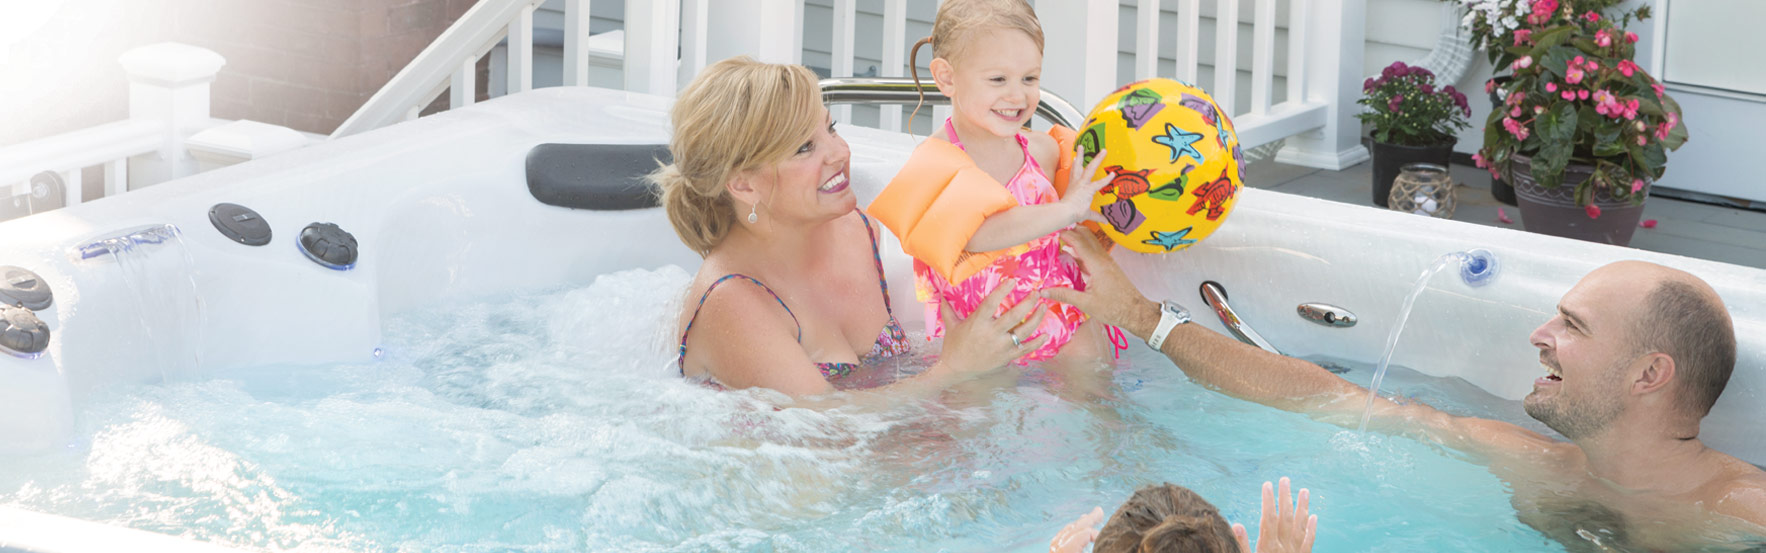 family enjoying an h2x fitness swim spa by master spas